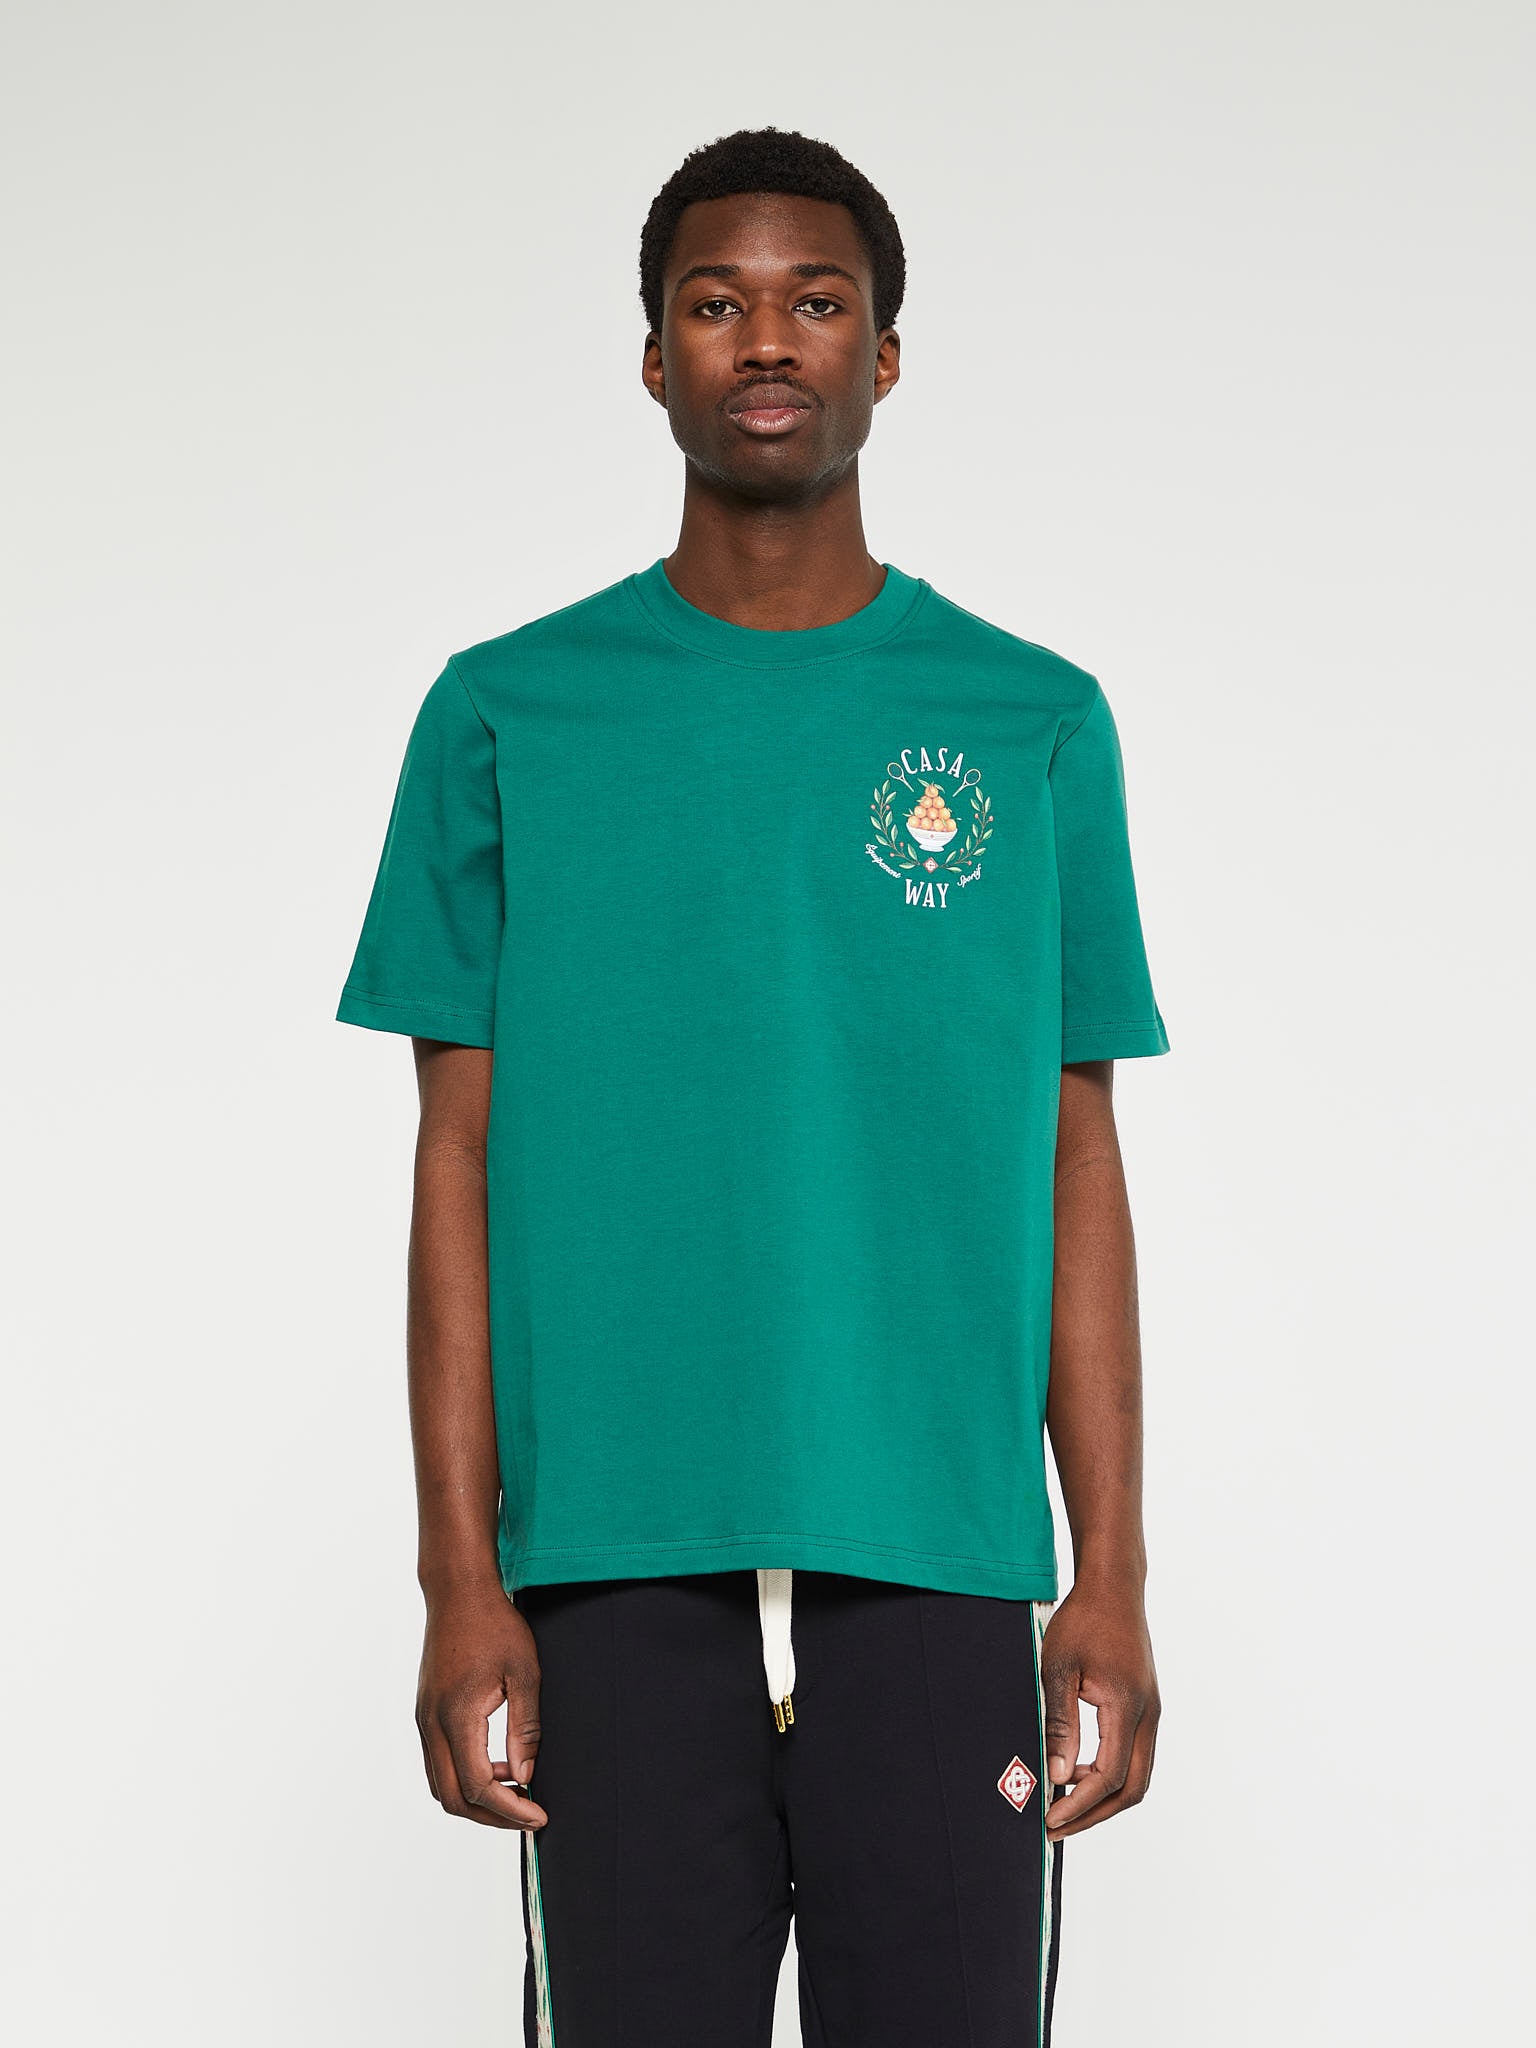 Casa Way Printed T-Shirt in Evergreen